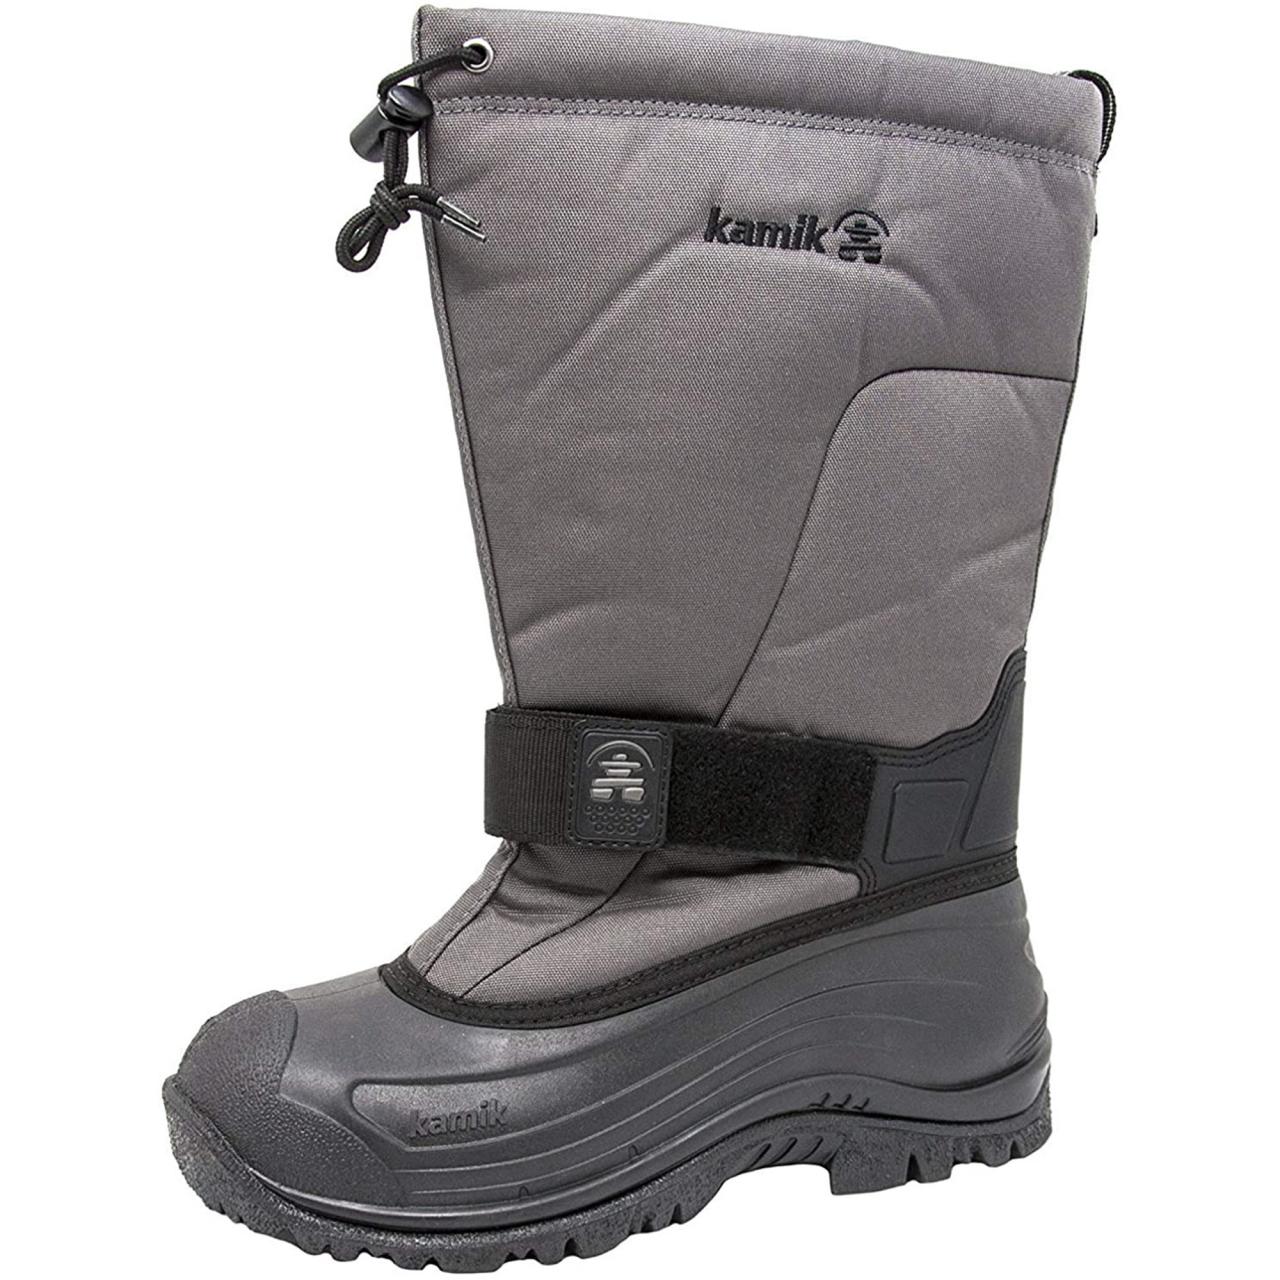 Kamik Men's Greenbay 4 Cold Weather Boot (12 D(M) US, Charcoal) | Walmart  Canada